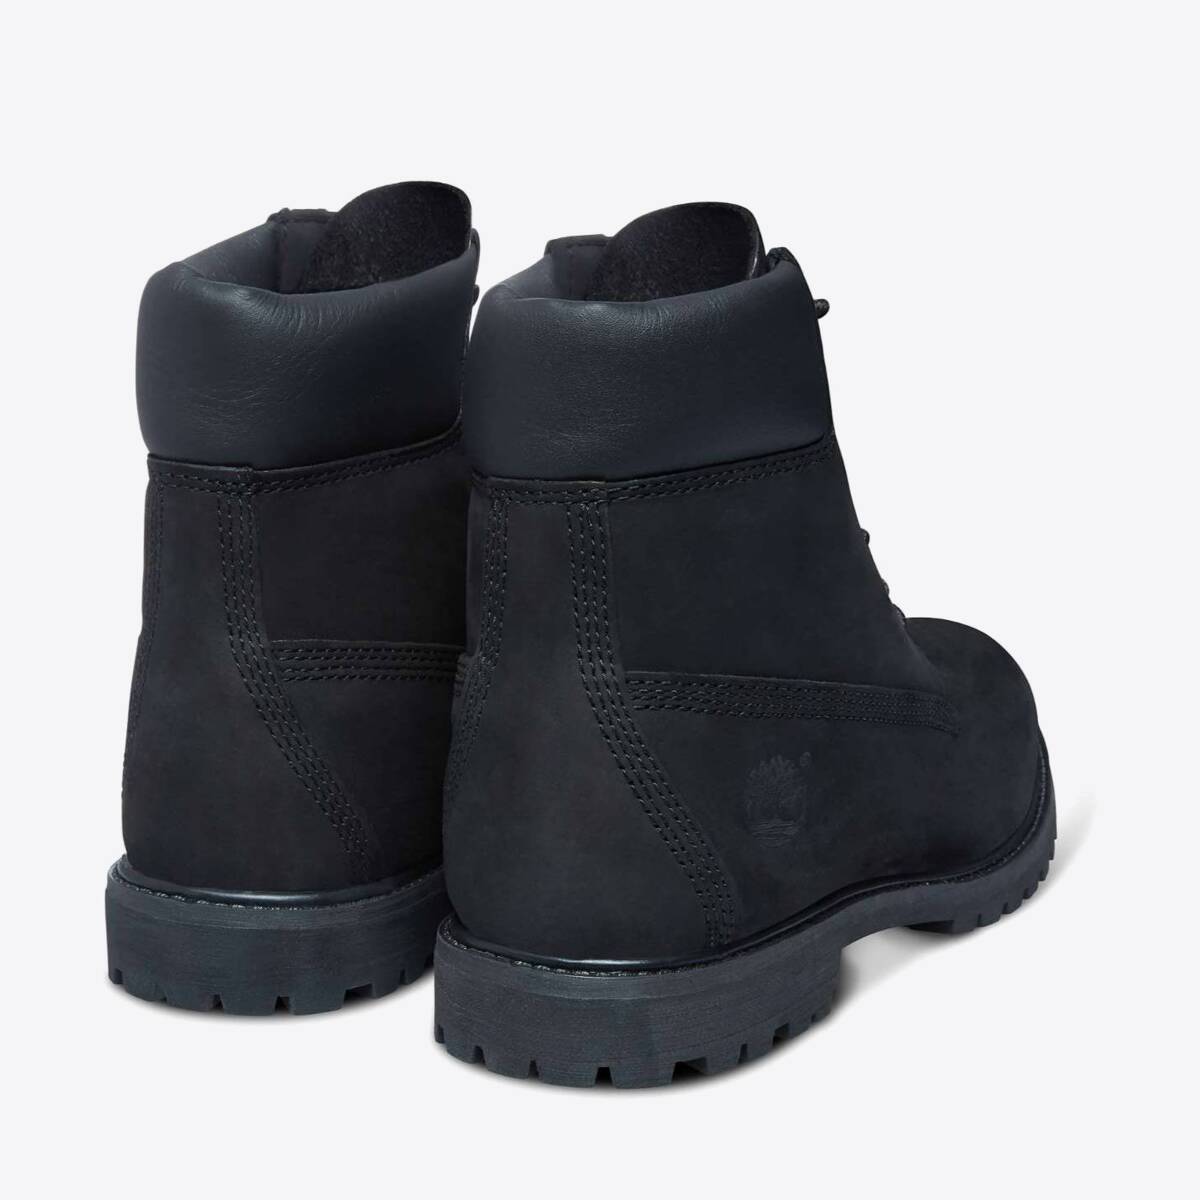 TIMBERLAND 6-Inch Premium Waterproof Boots Black - Image 5